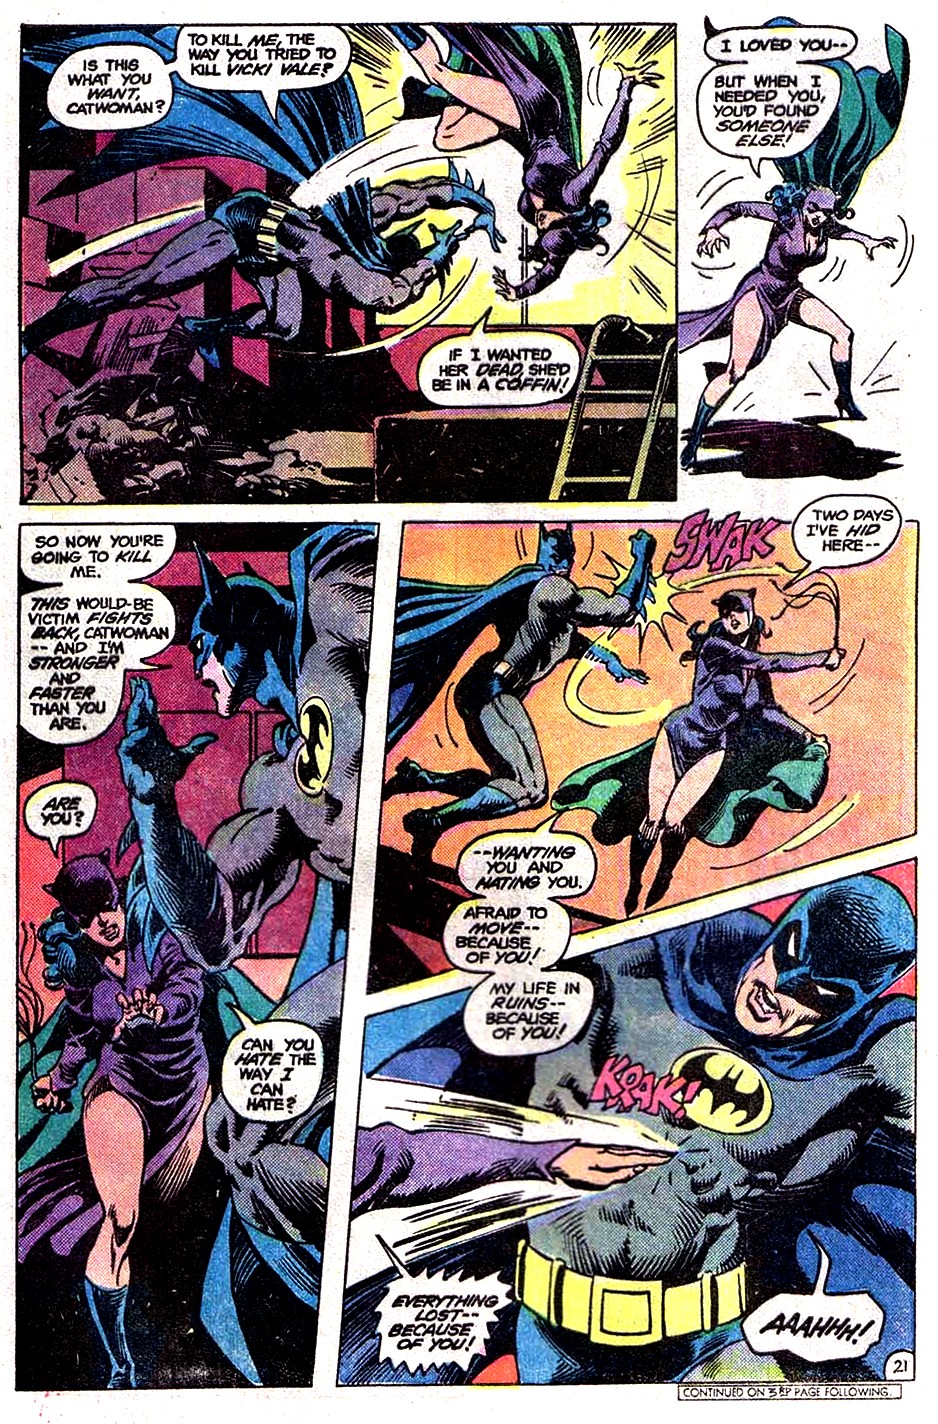 Read Up on Batman @ The Thought Balloon: Batmn 355 / 1983